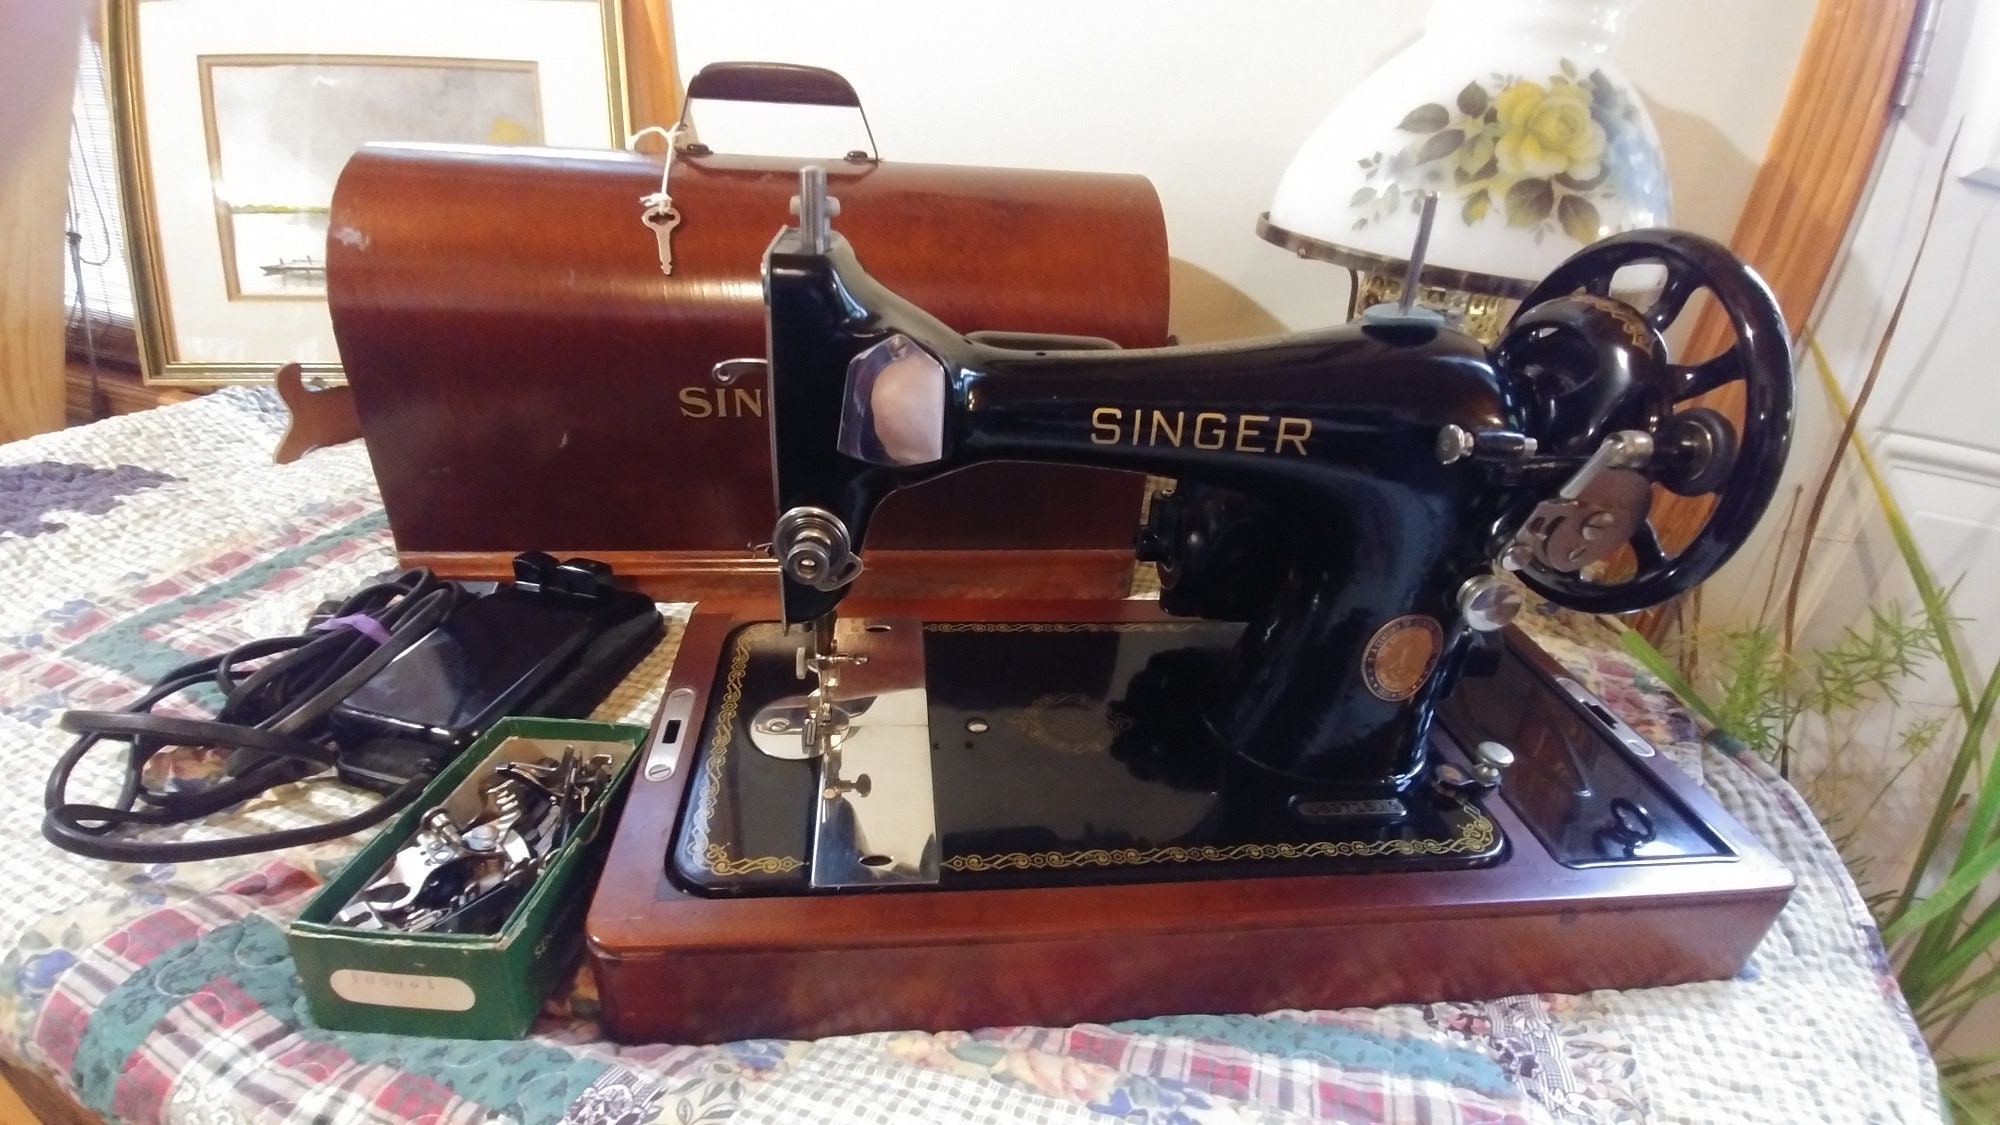 Handheld Sewing Machine Portable Mini Sewing Machine for Fabric